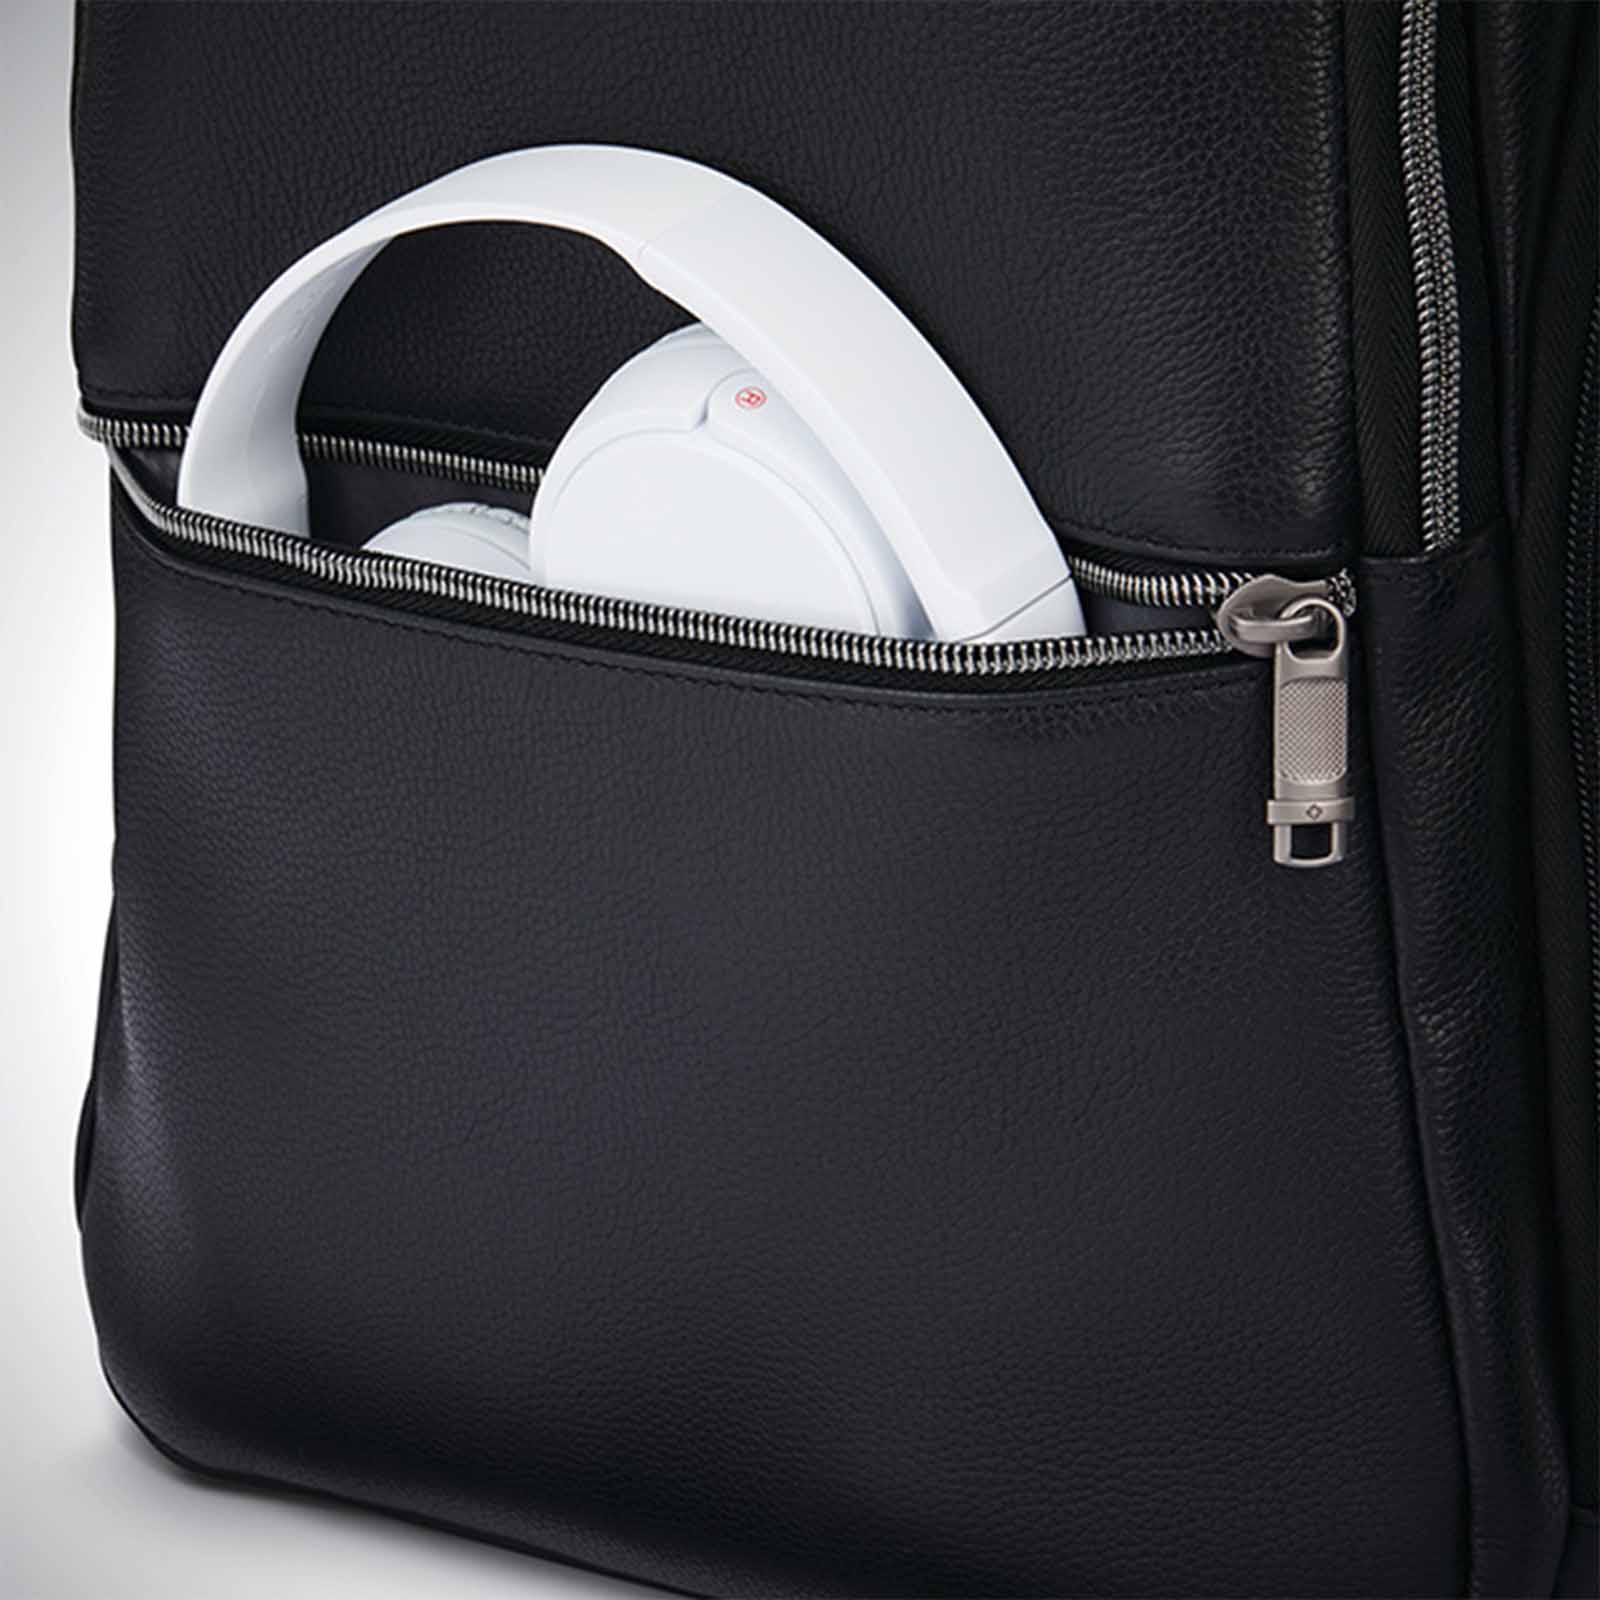 Samsonite-Classic-Leather-14-Inch-Laptop-Backpack-Black-Pocket